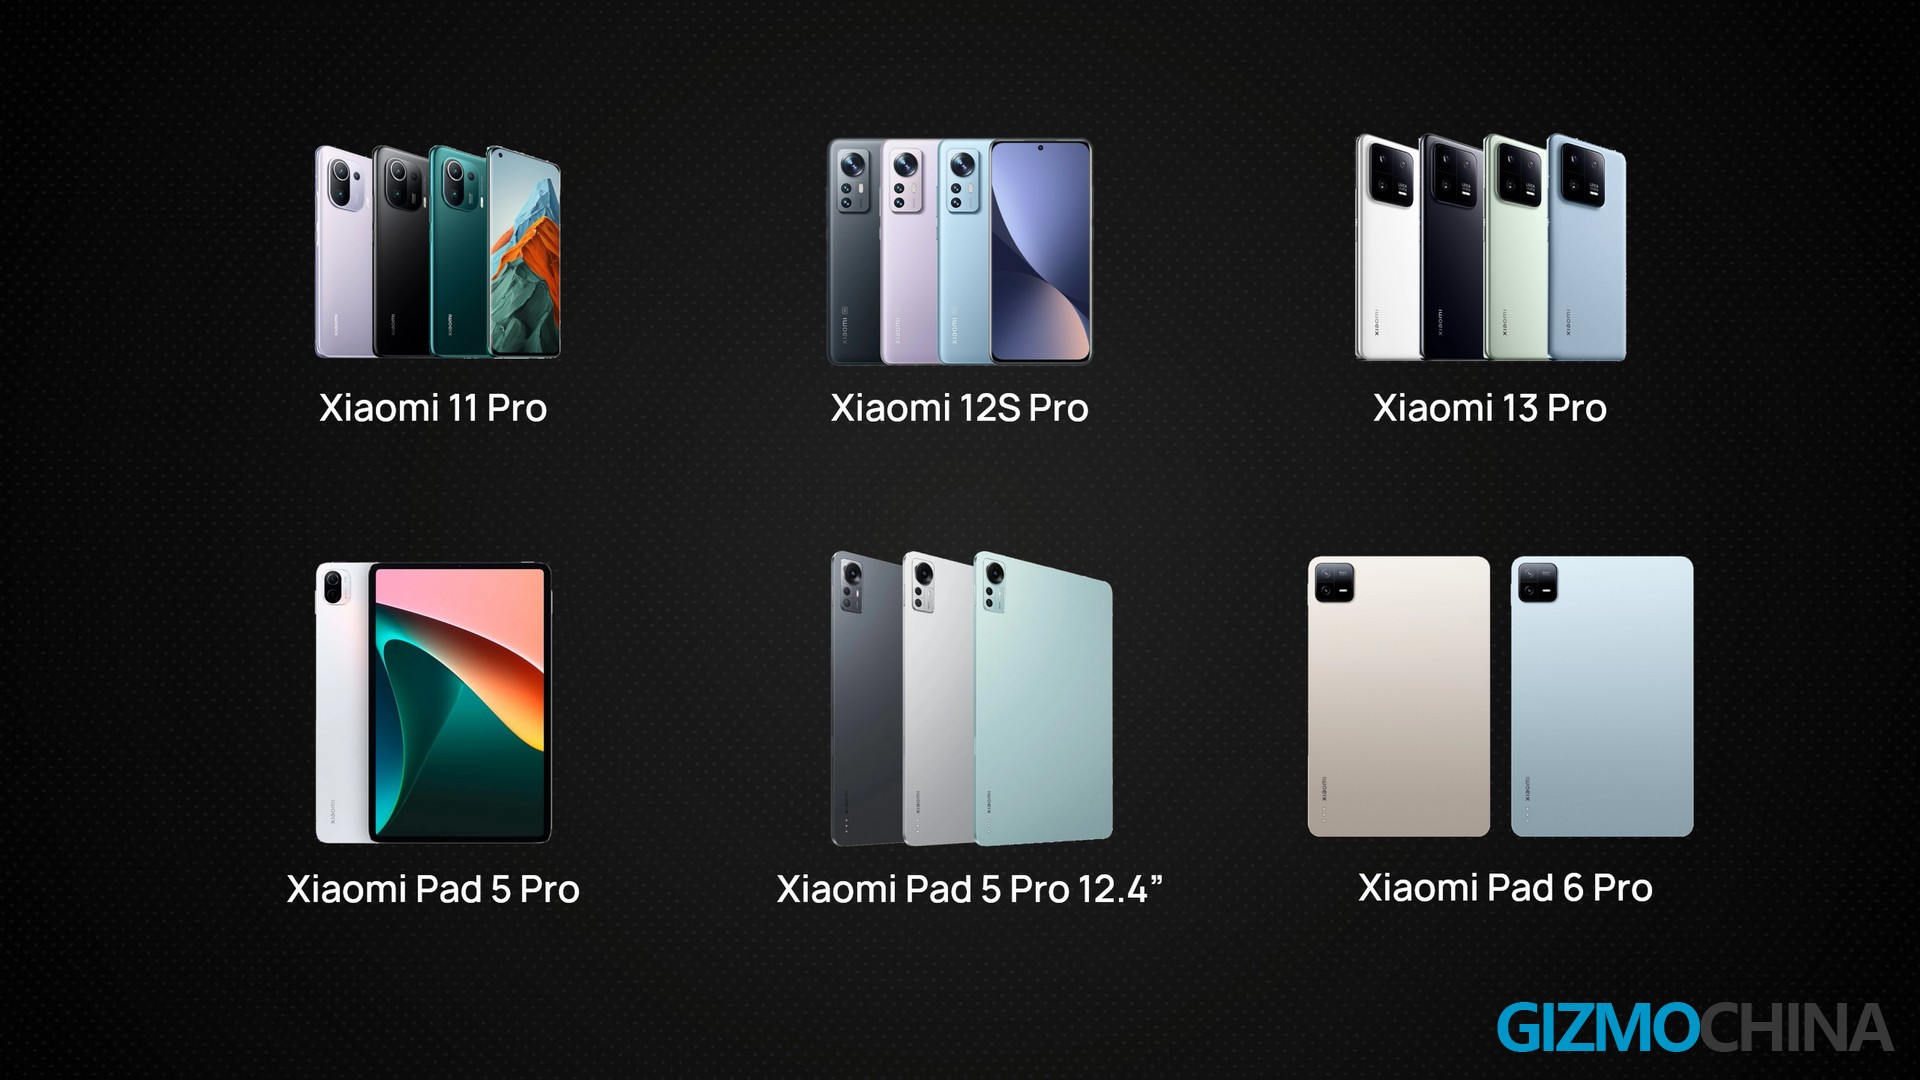 Xiaomi Pad 6 Pro 